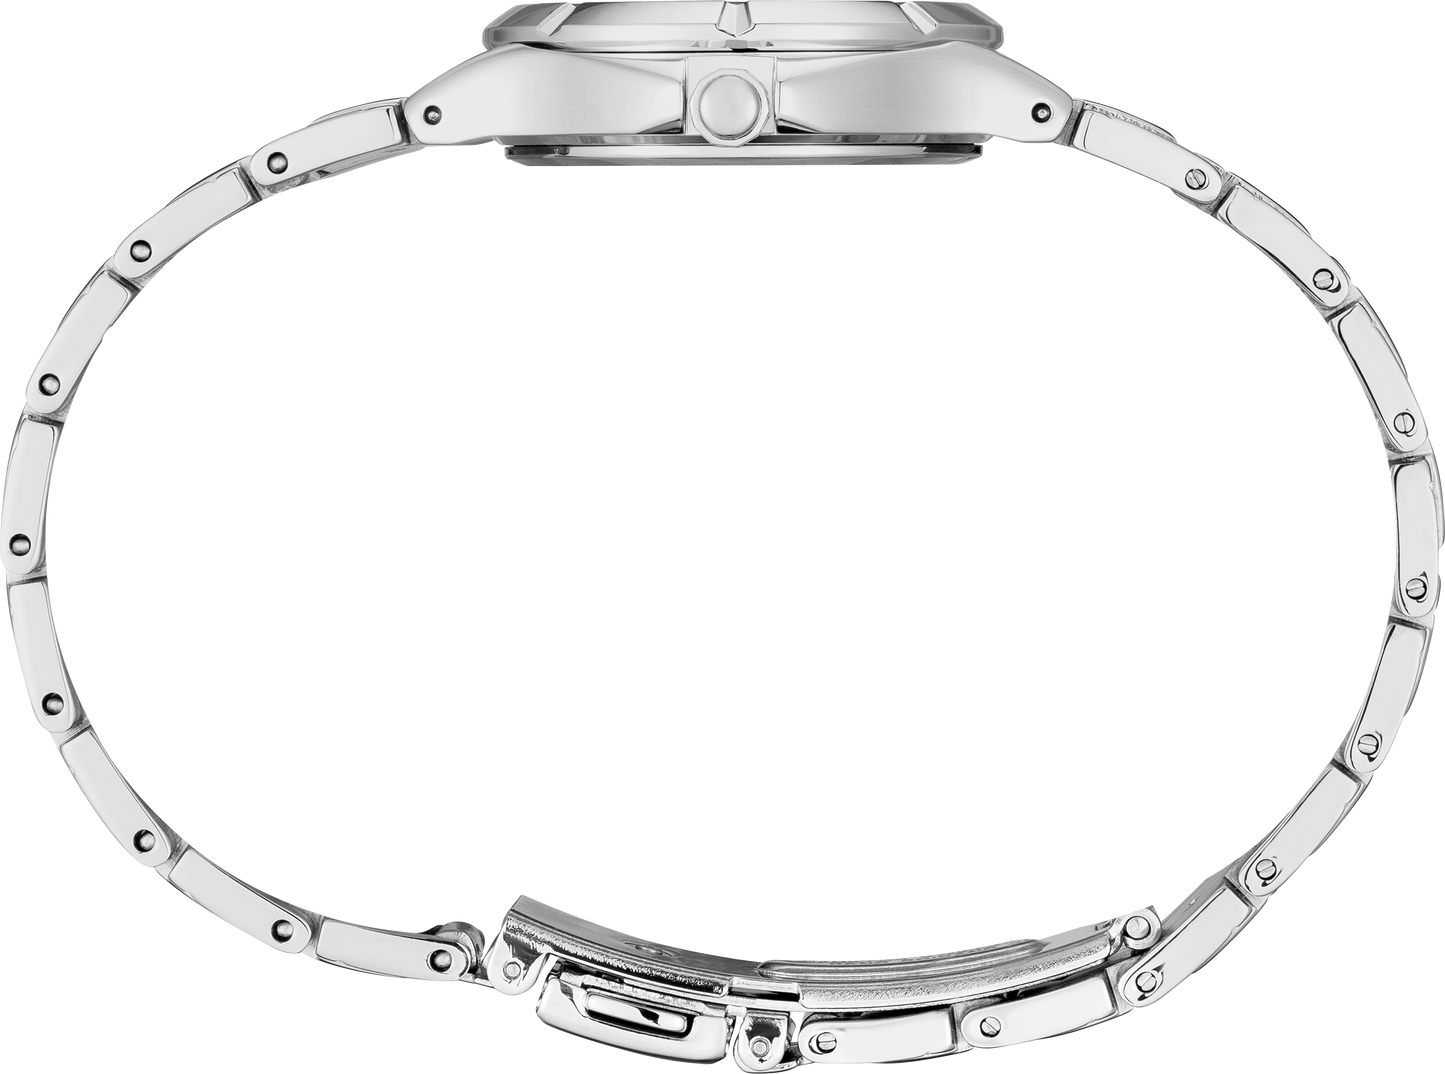 Seiko Essentials Womens Silver Tone Stainless Steel Bracelet Watch SUR413